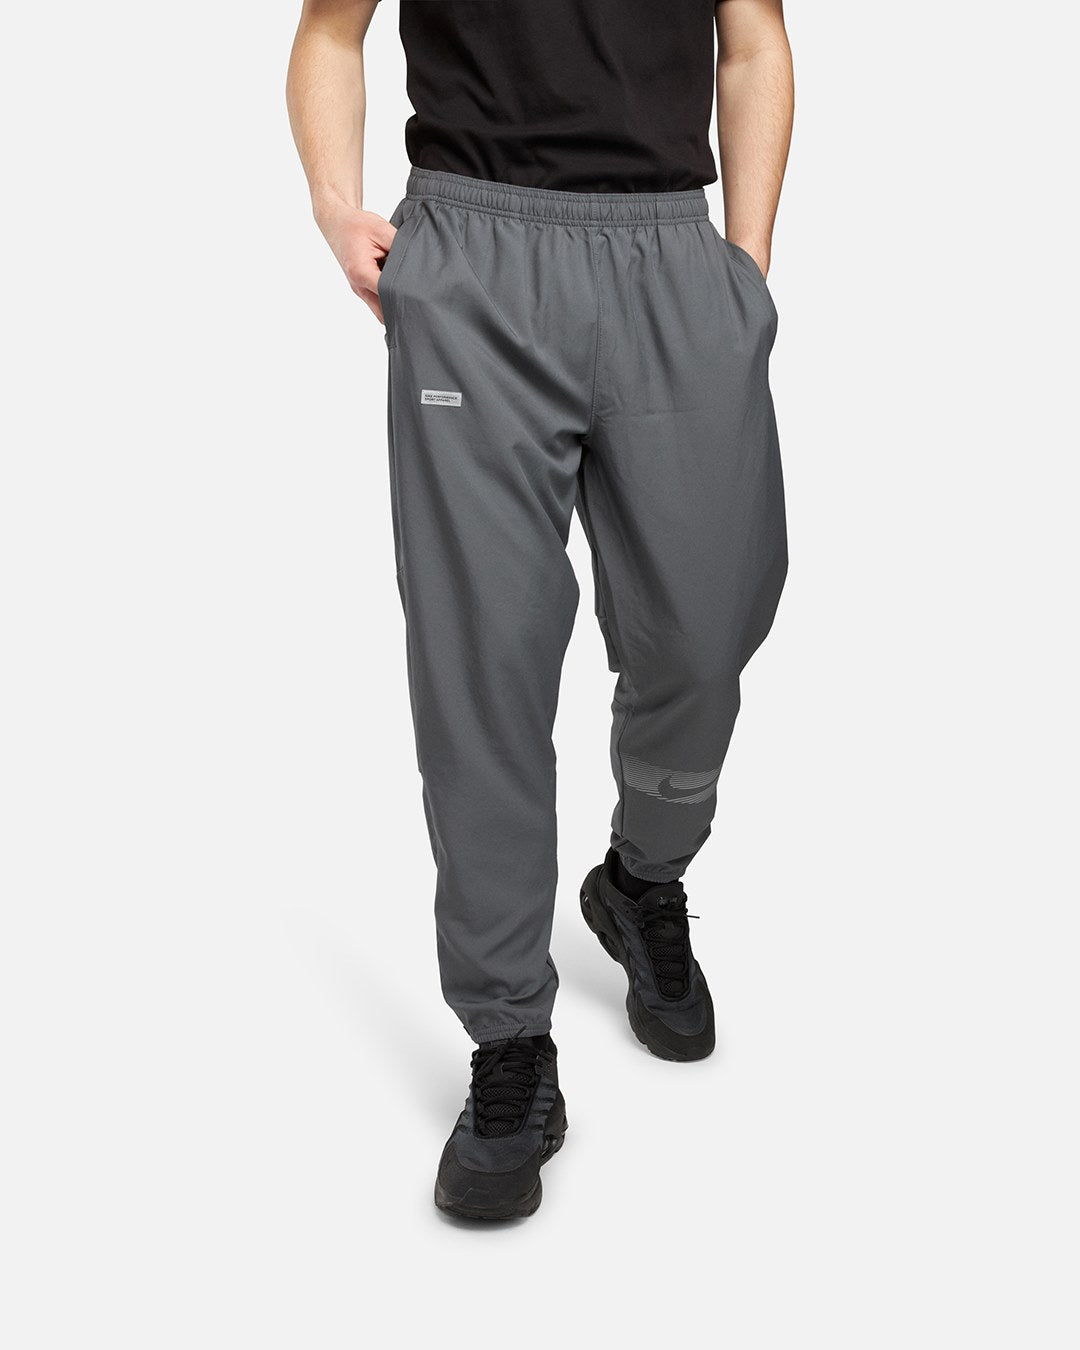 Pantaloni Nike Challenger Flash - Grigio scuro